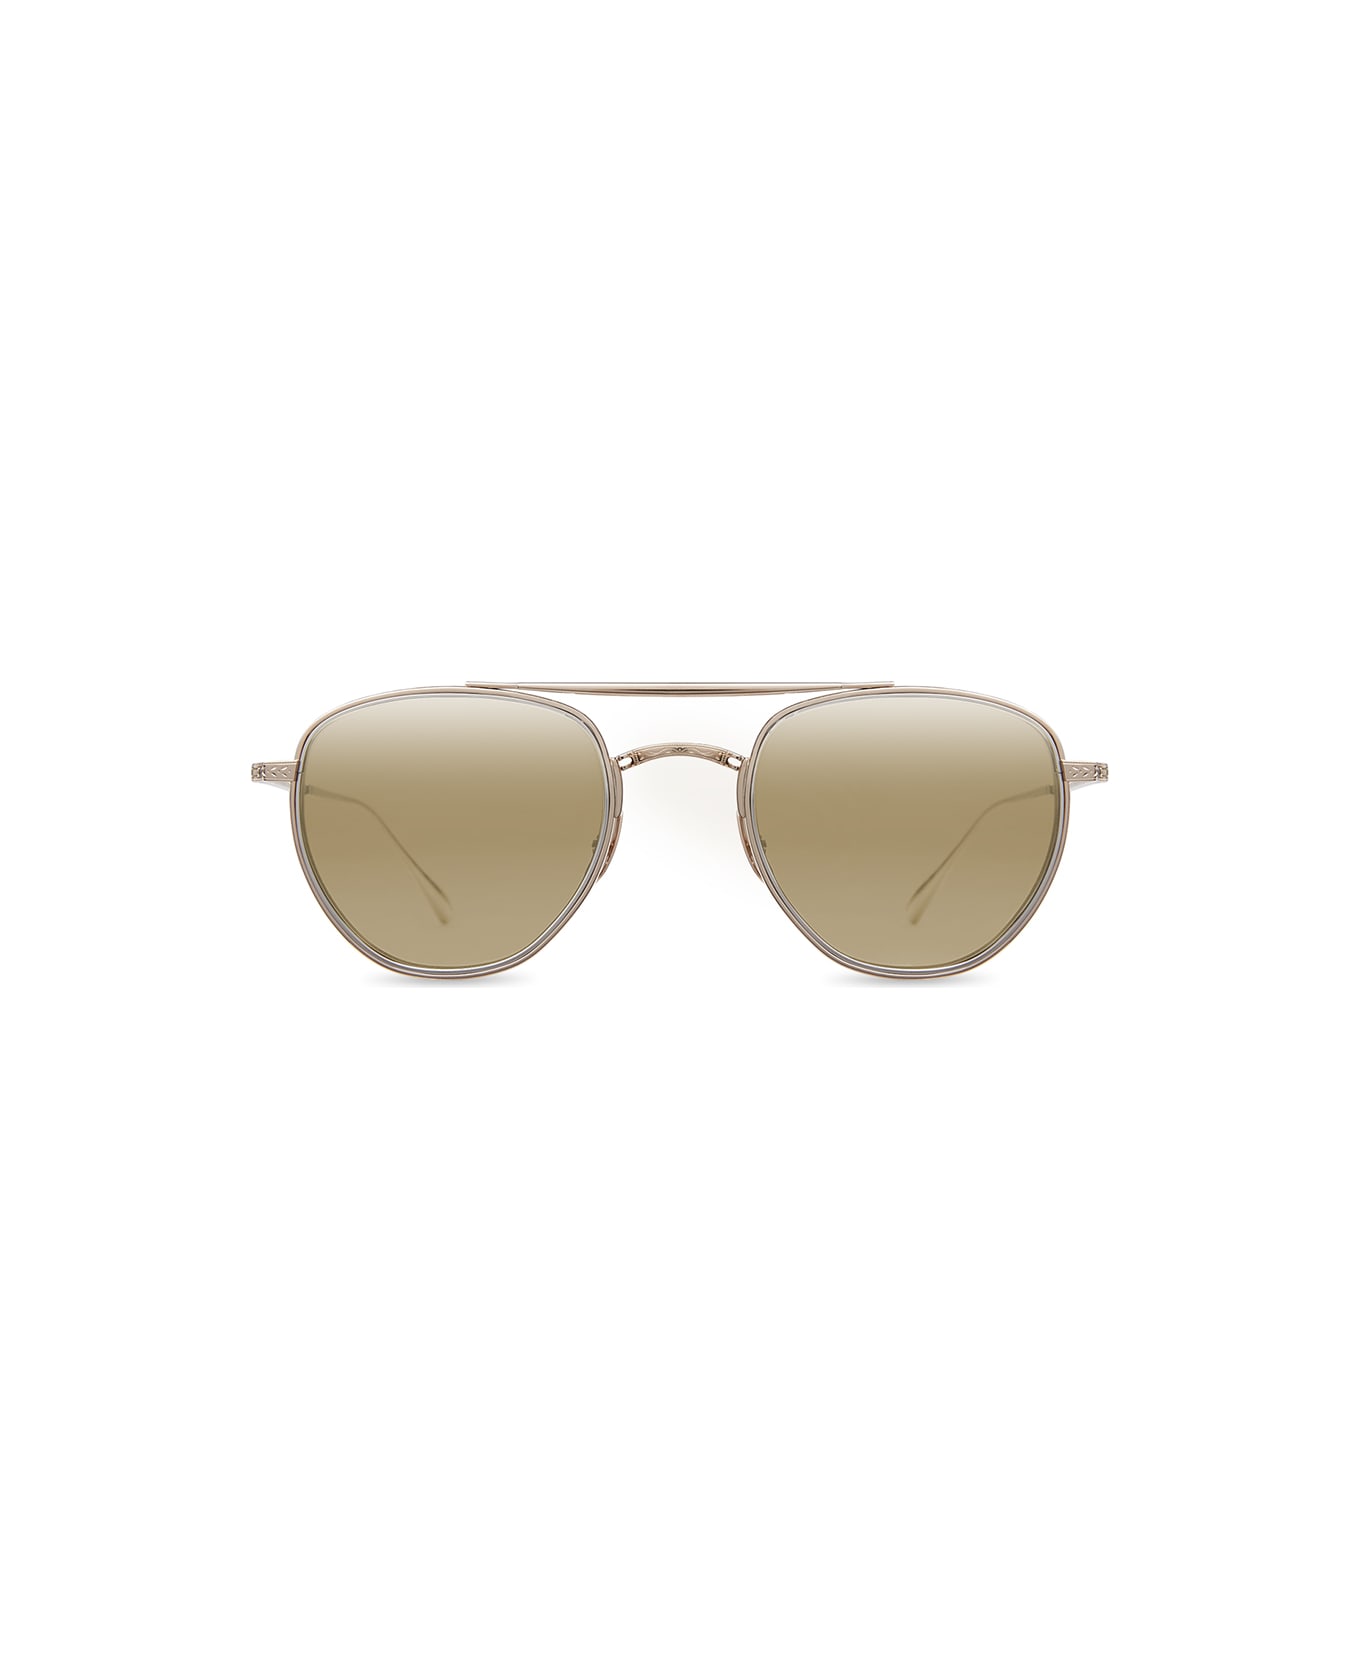 Mr. Leight Roku Ii S 12k White Gold Sunglasses -  12K White Gold